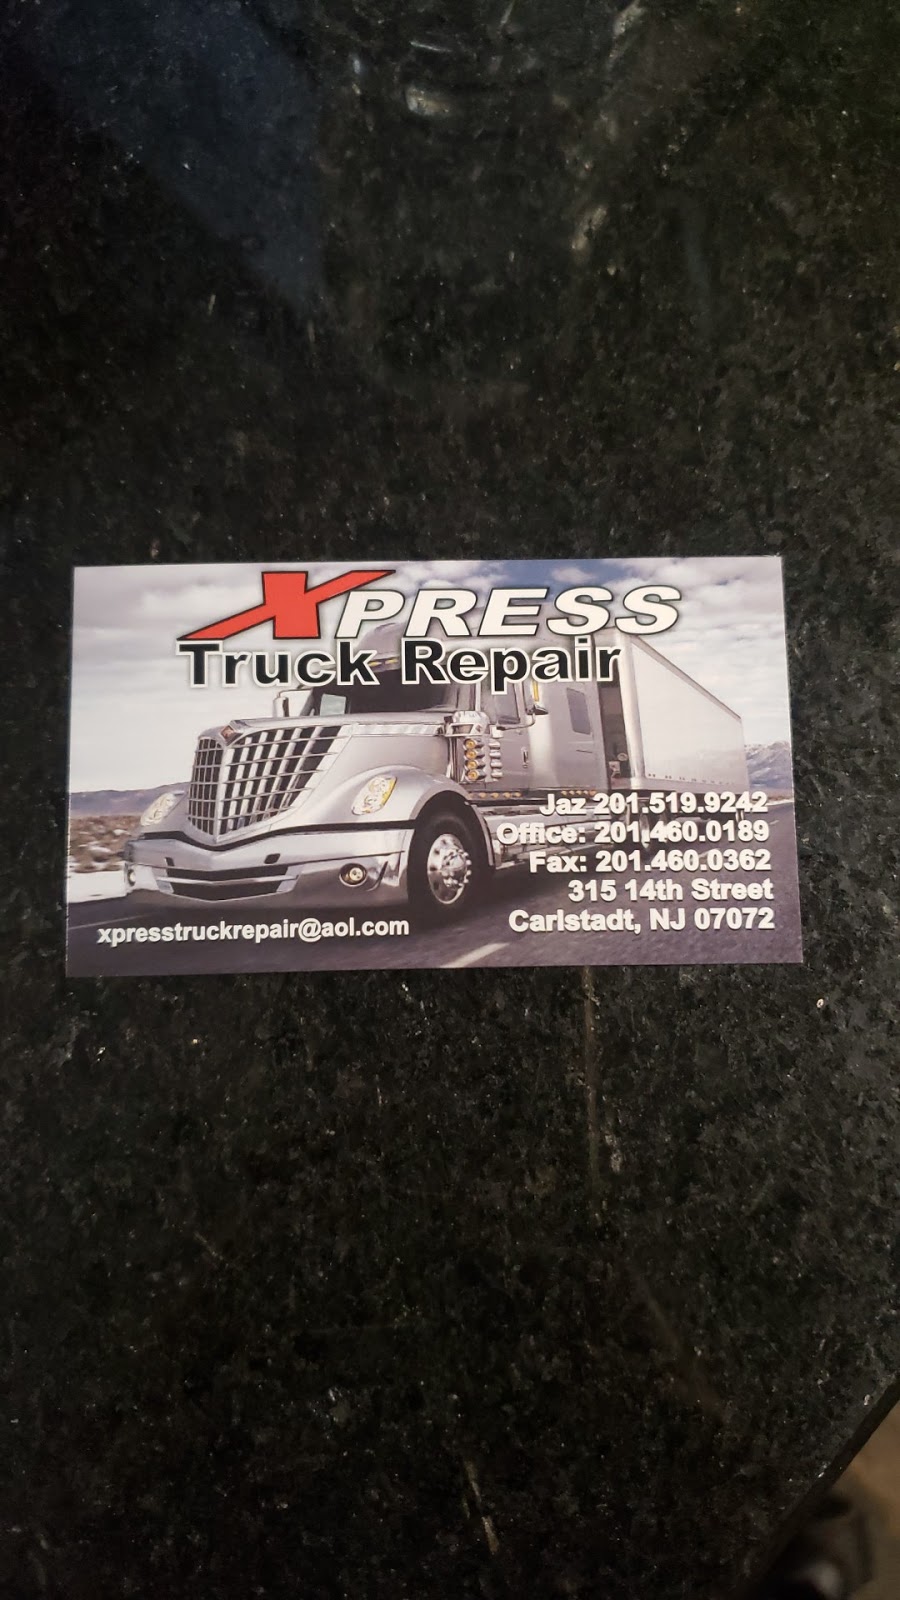 Xpress Truck Repair | 315 14th St, Carlstadt, NJ 07072 | Phone: (201) 460-0189